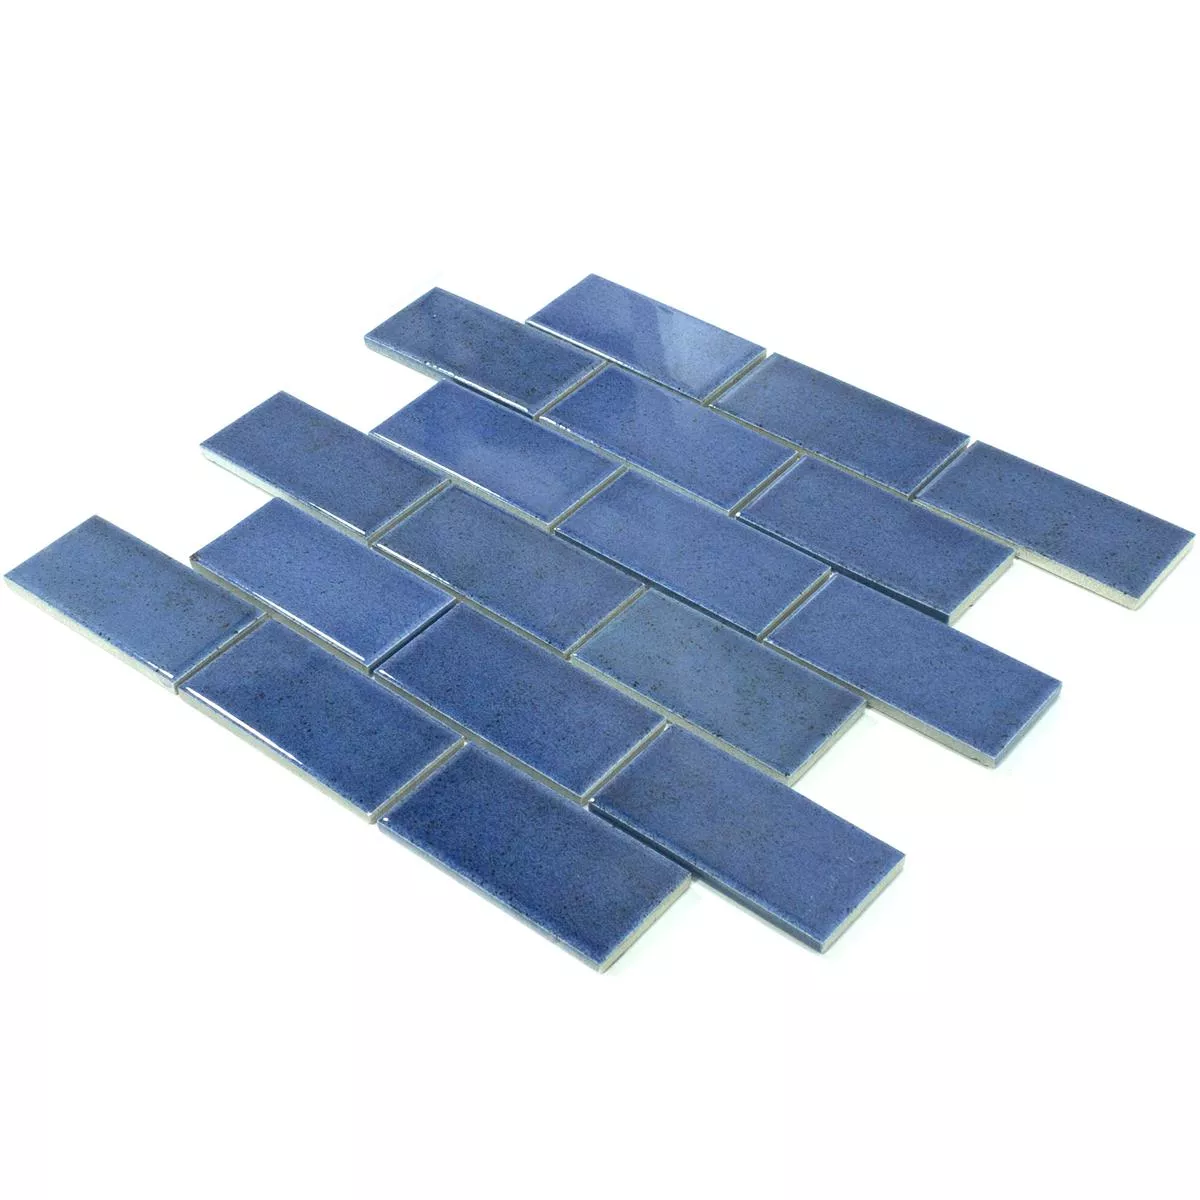 Cerâmica Azulejo Mosaico Eldertown Brick Azul Escuro